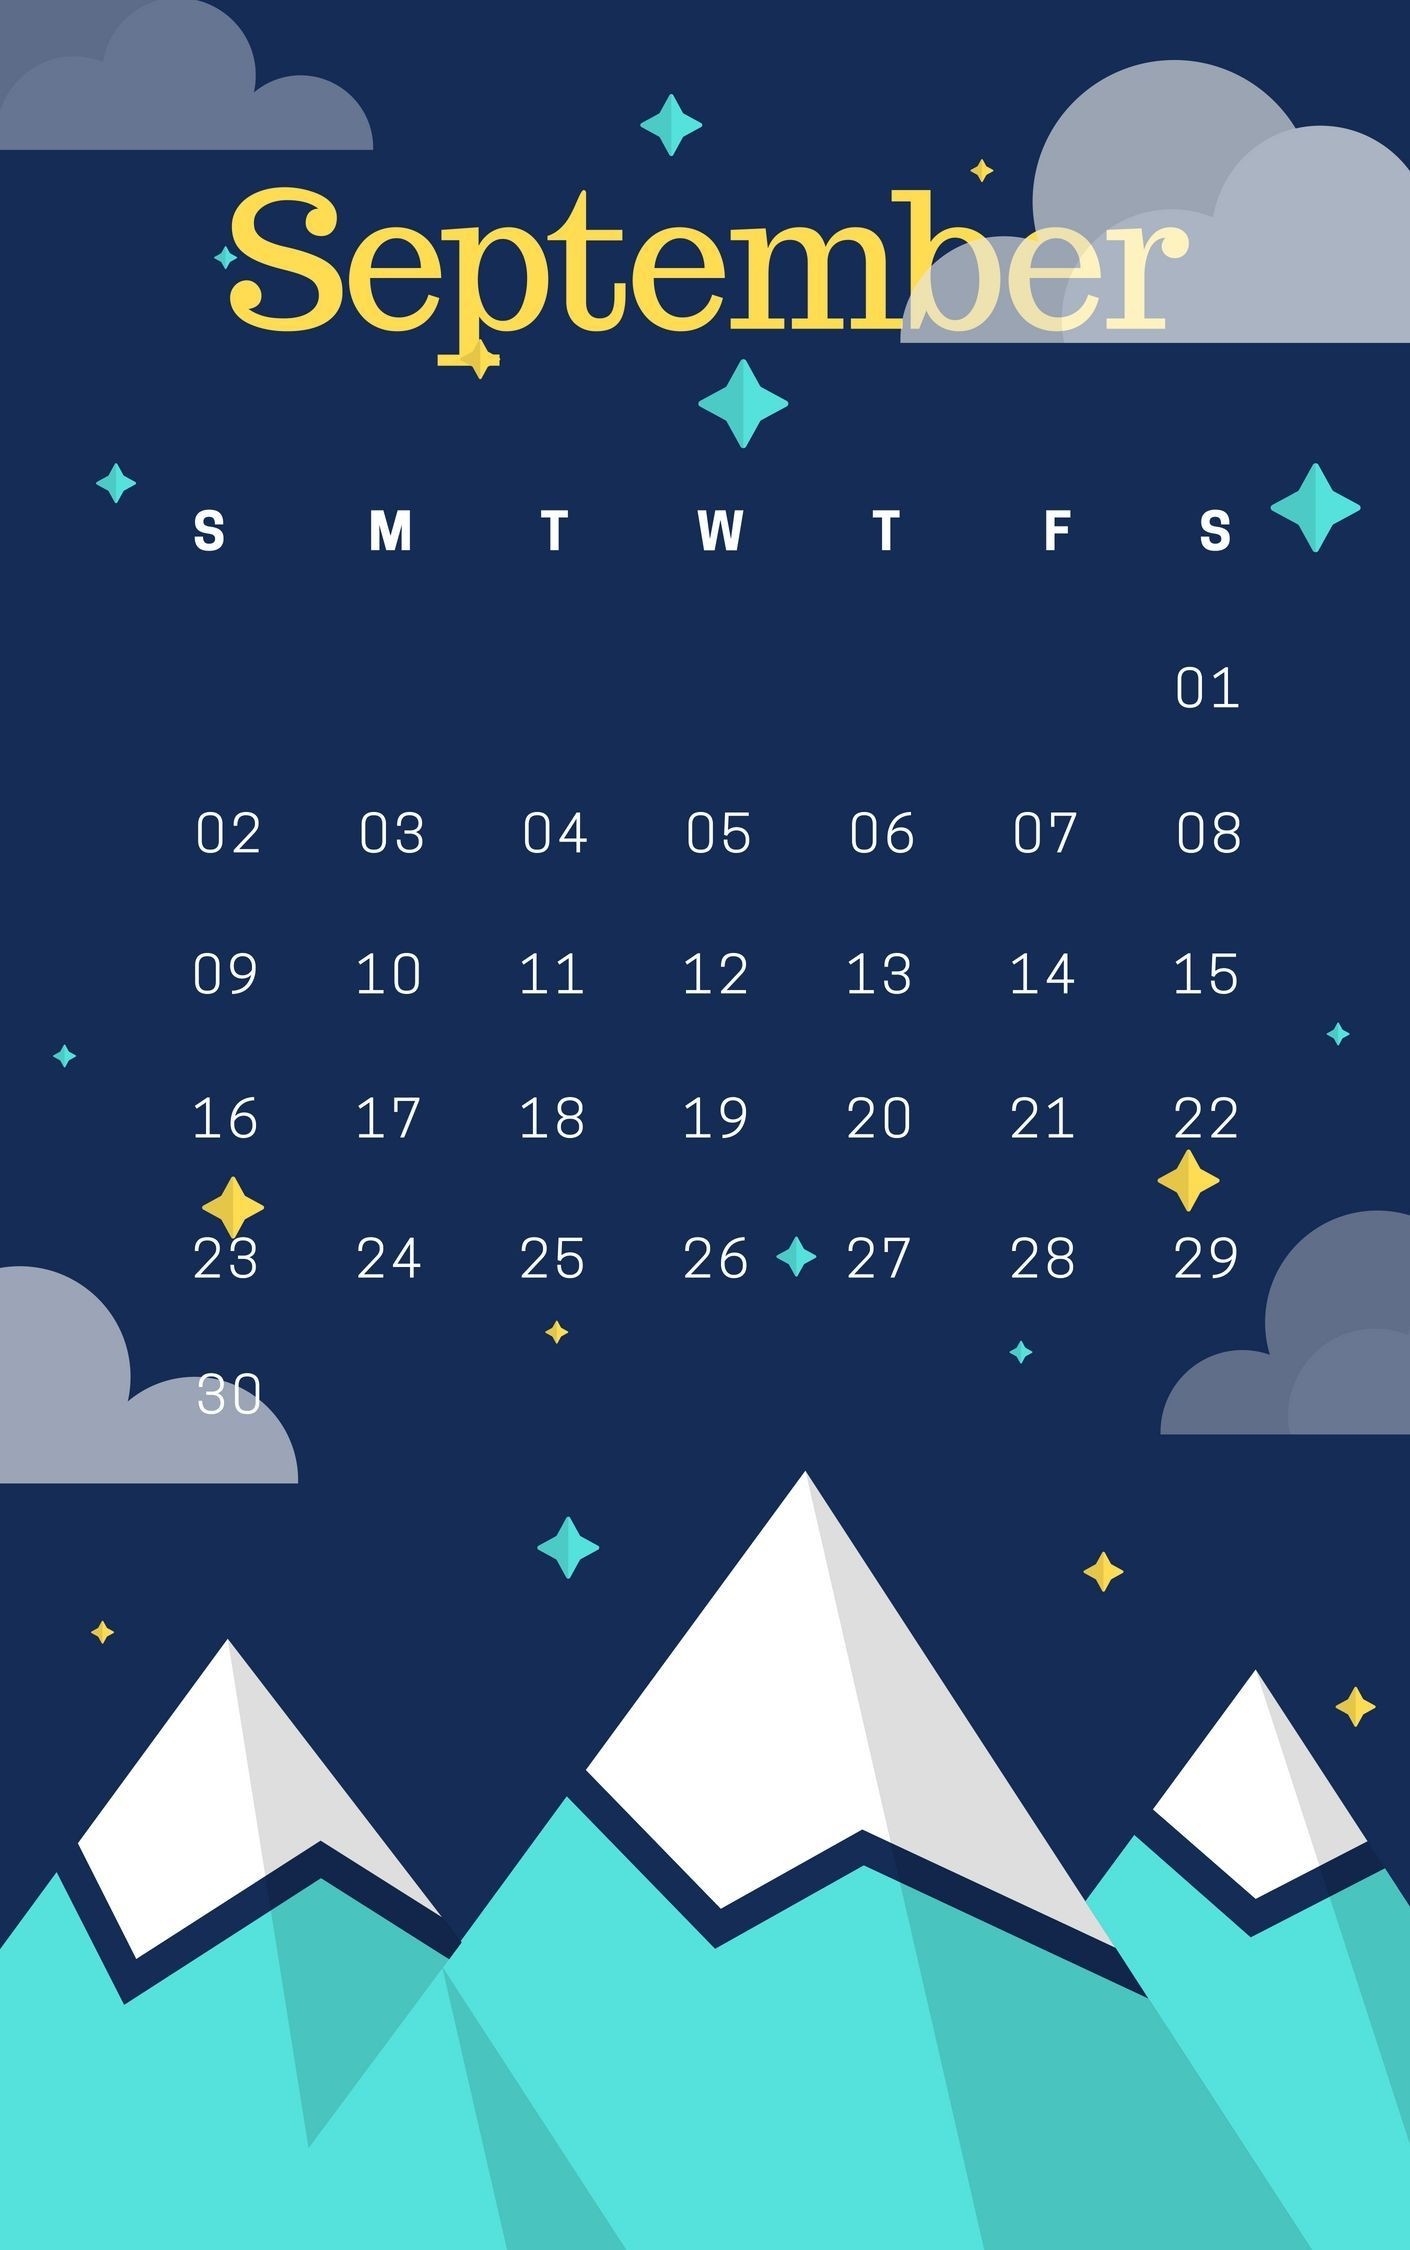 Latest September 2018 Iphone Wallpaper Iphone Calendars - Designer Calendar 2019 September - HD Wallpaper 